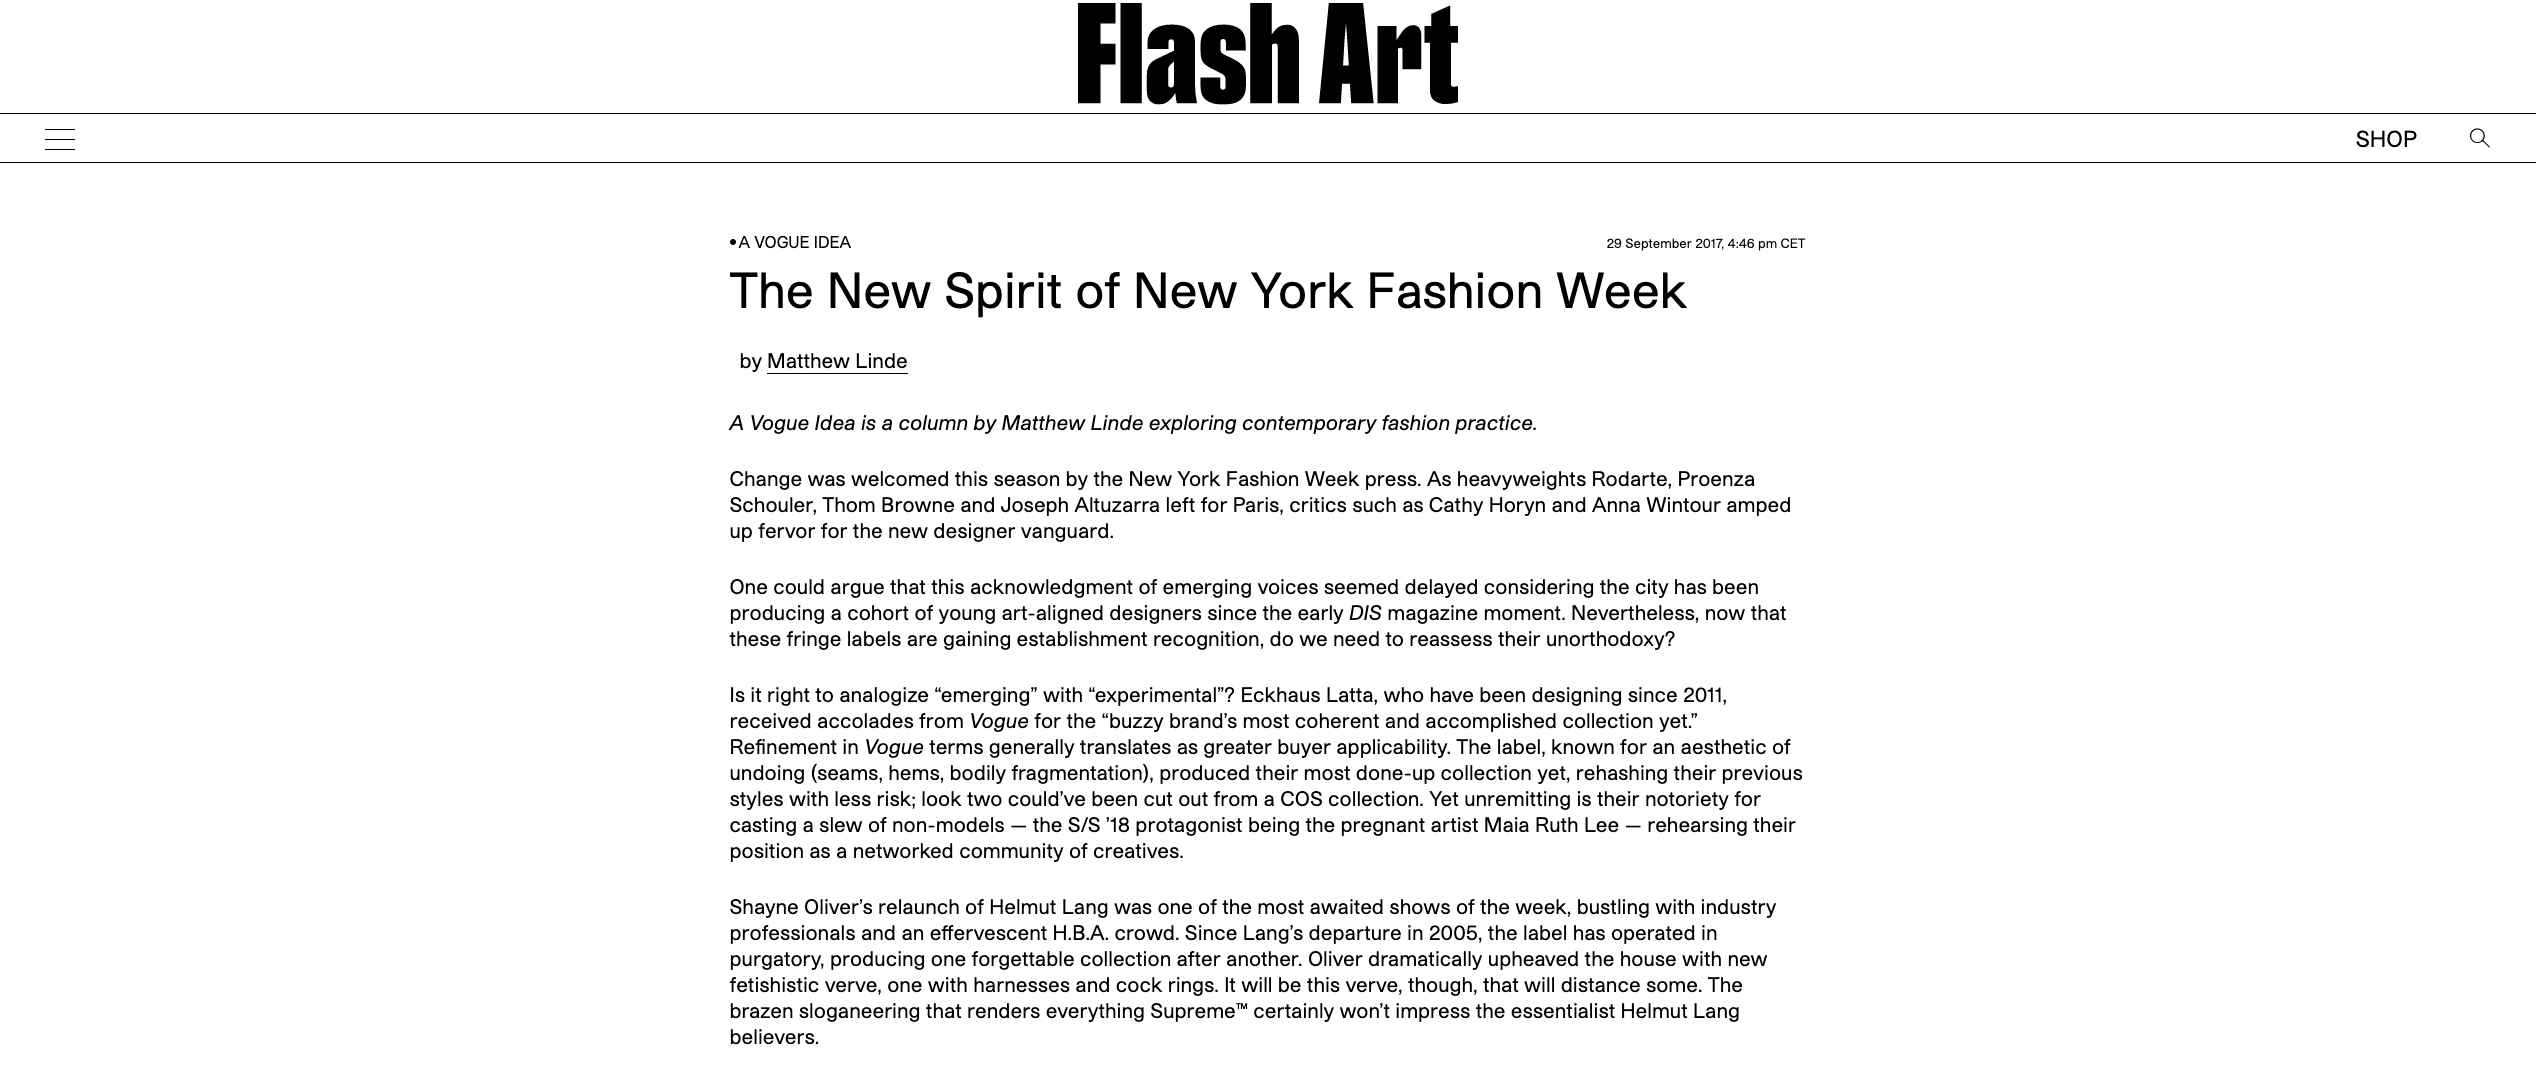 The New Spirit of New York Fashion Week 